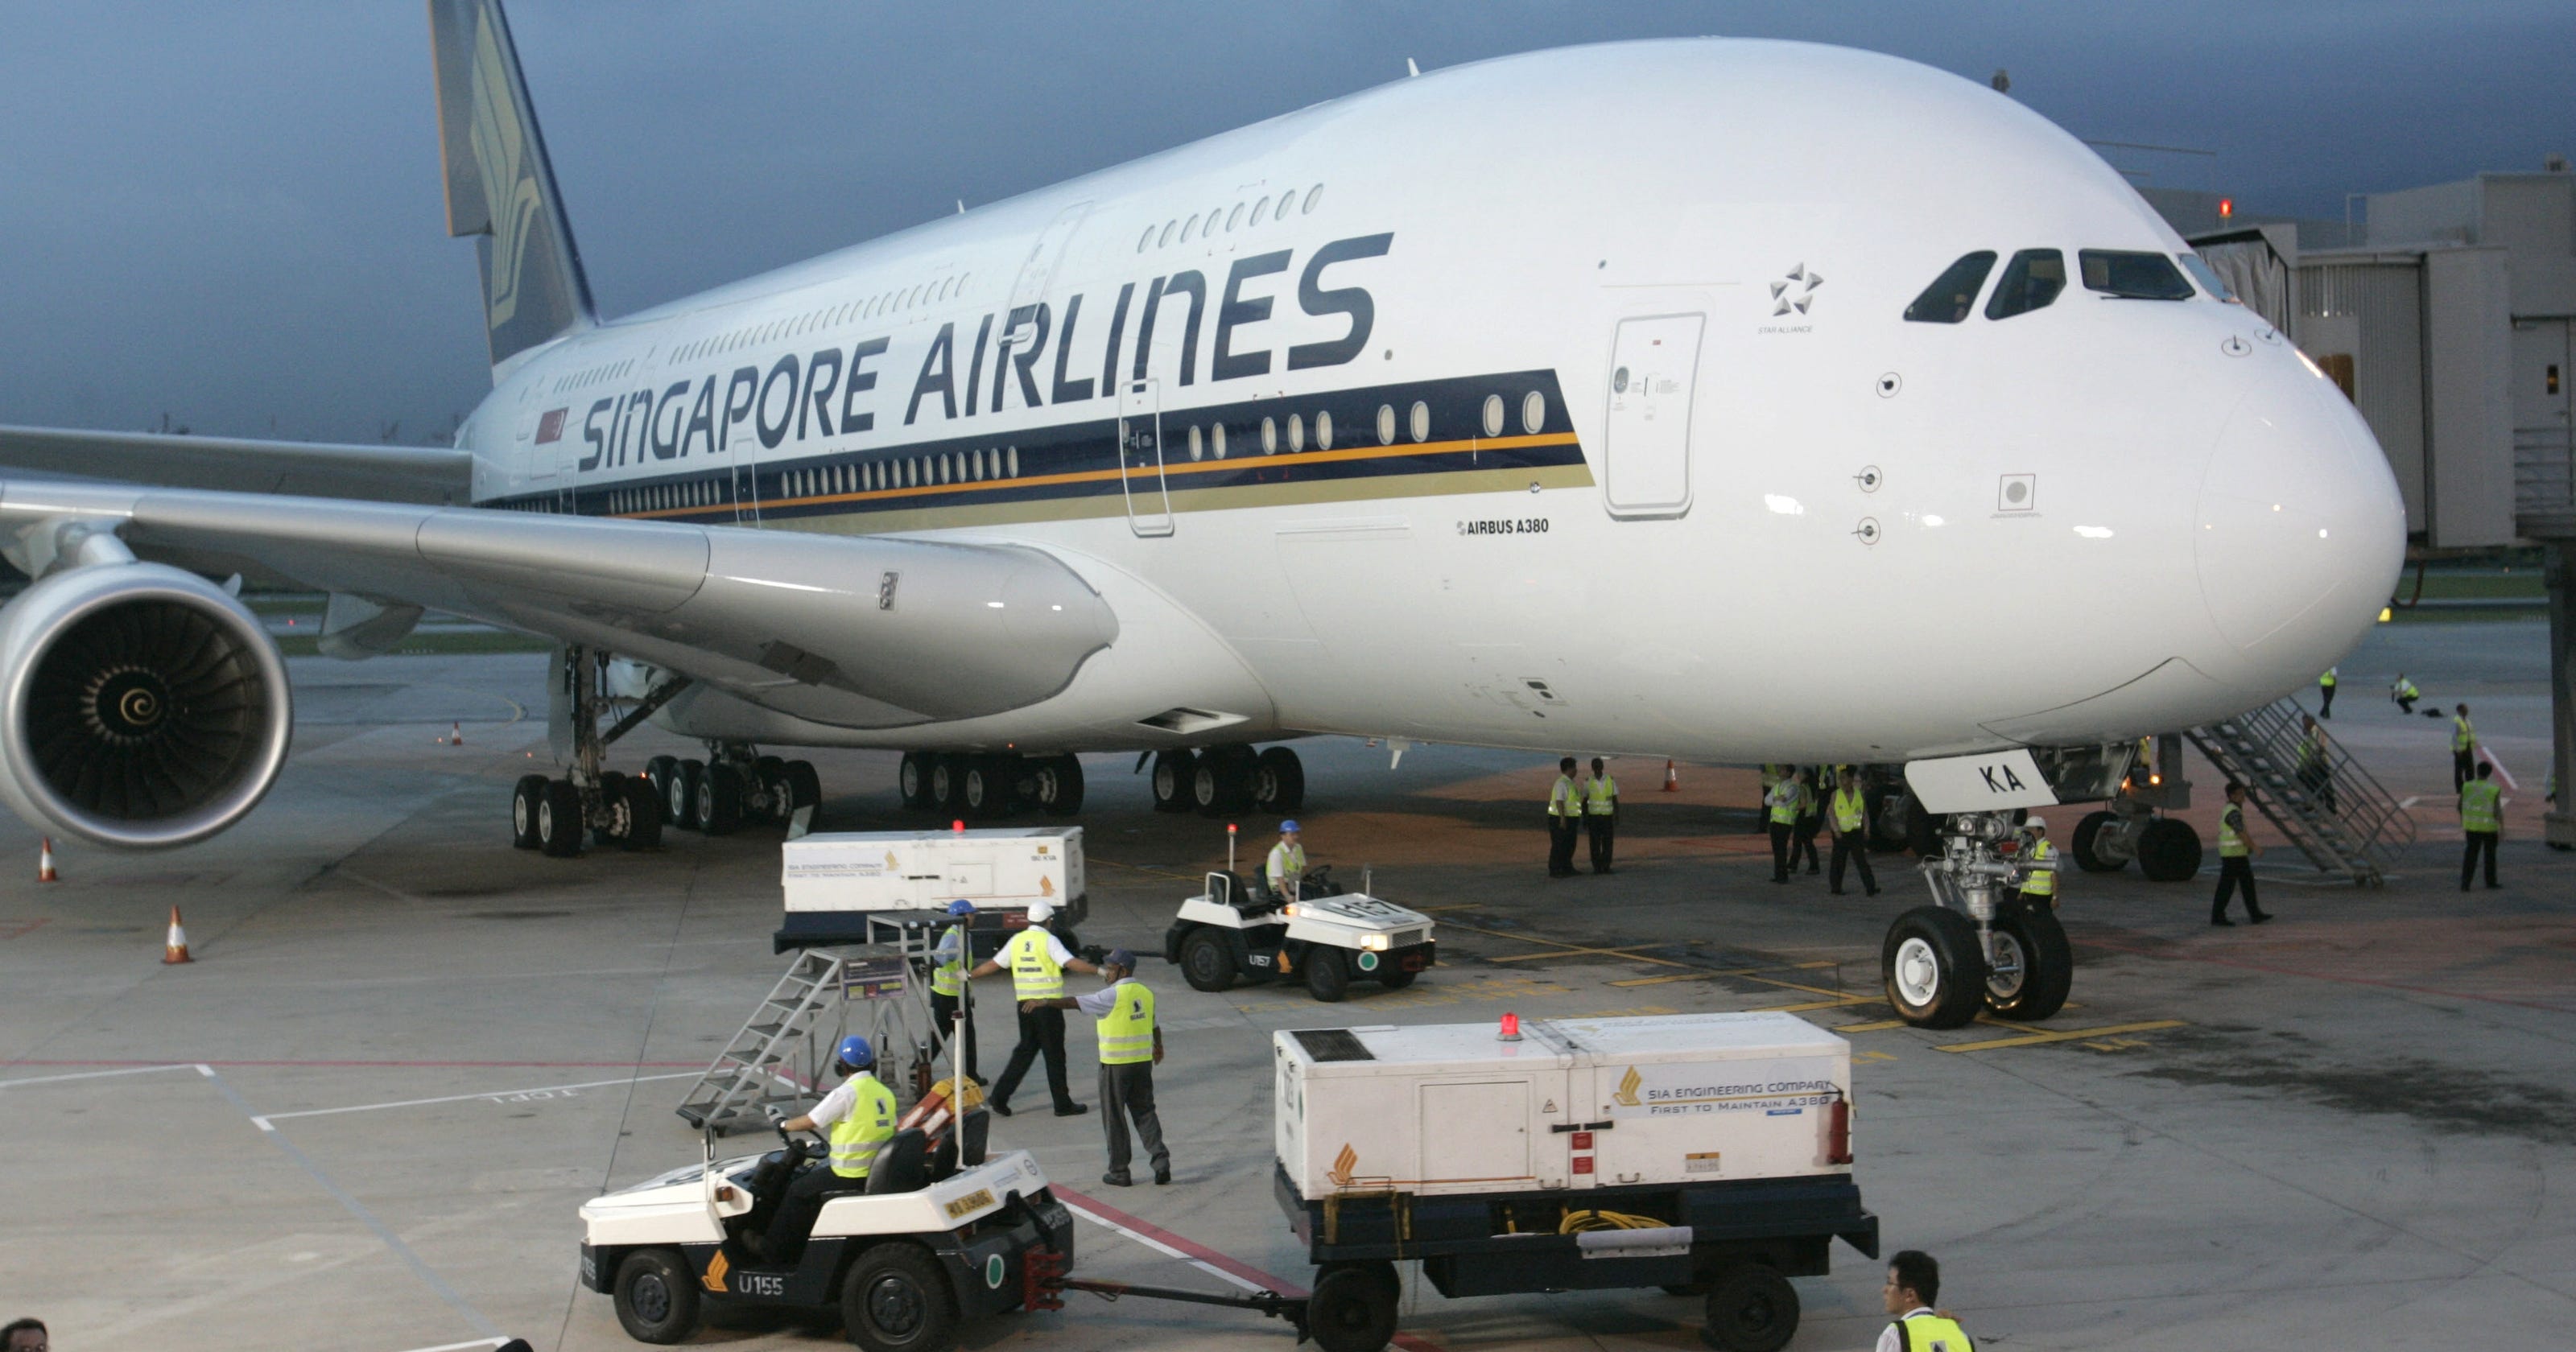 Singapore Airlines to drop world's longest flights